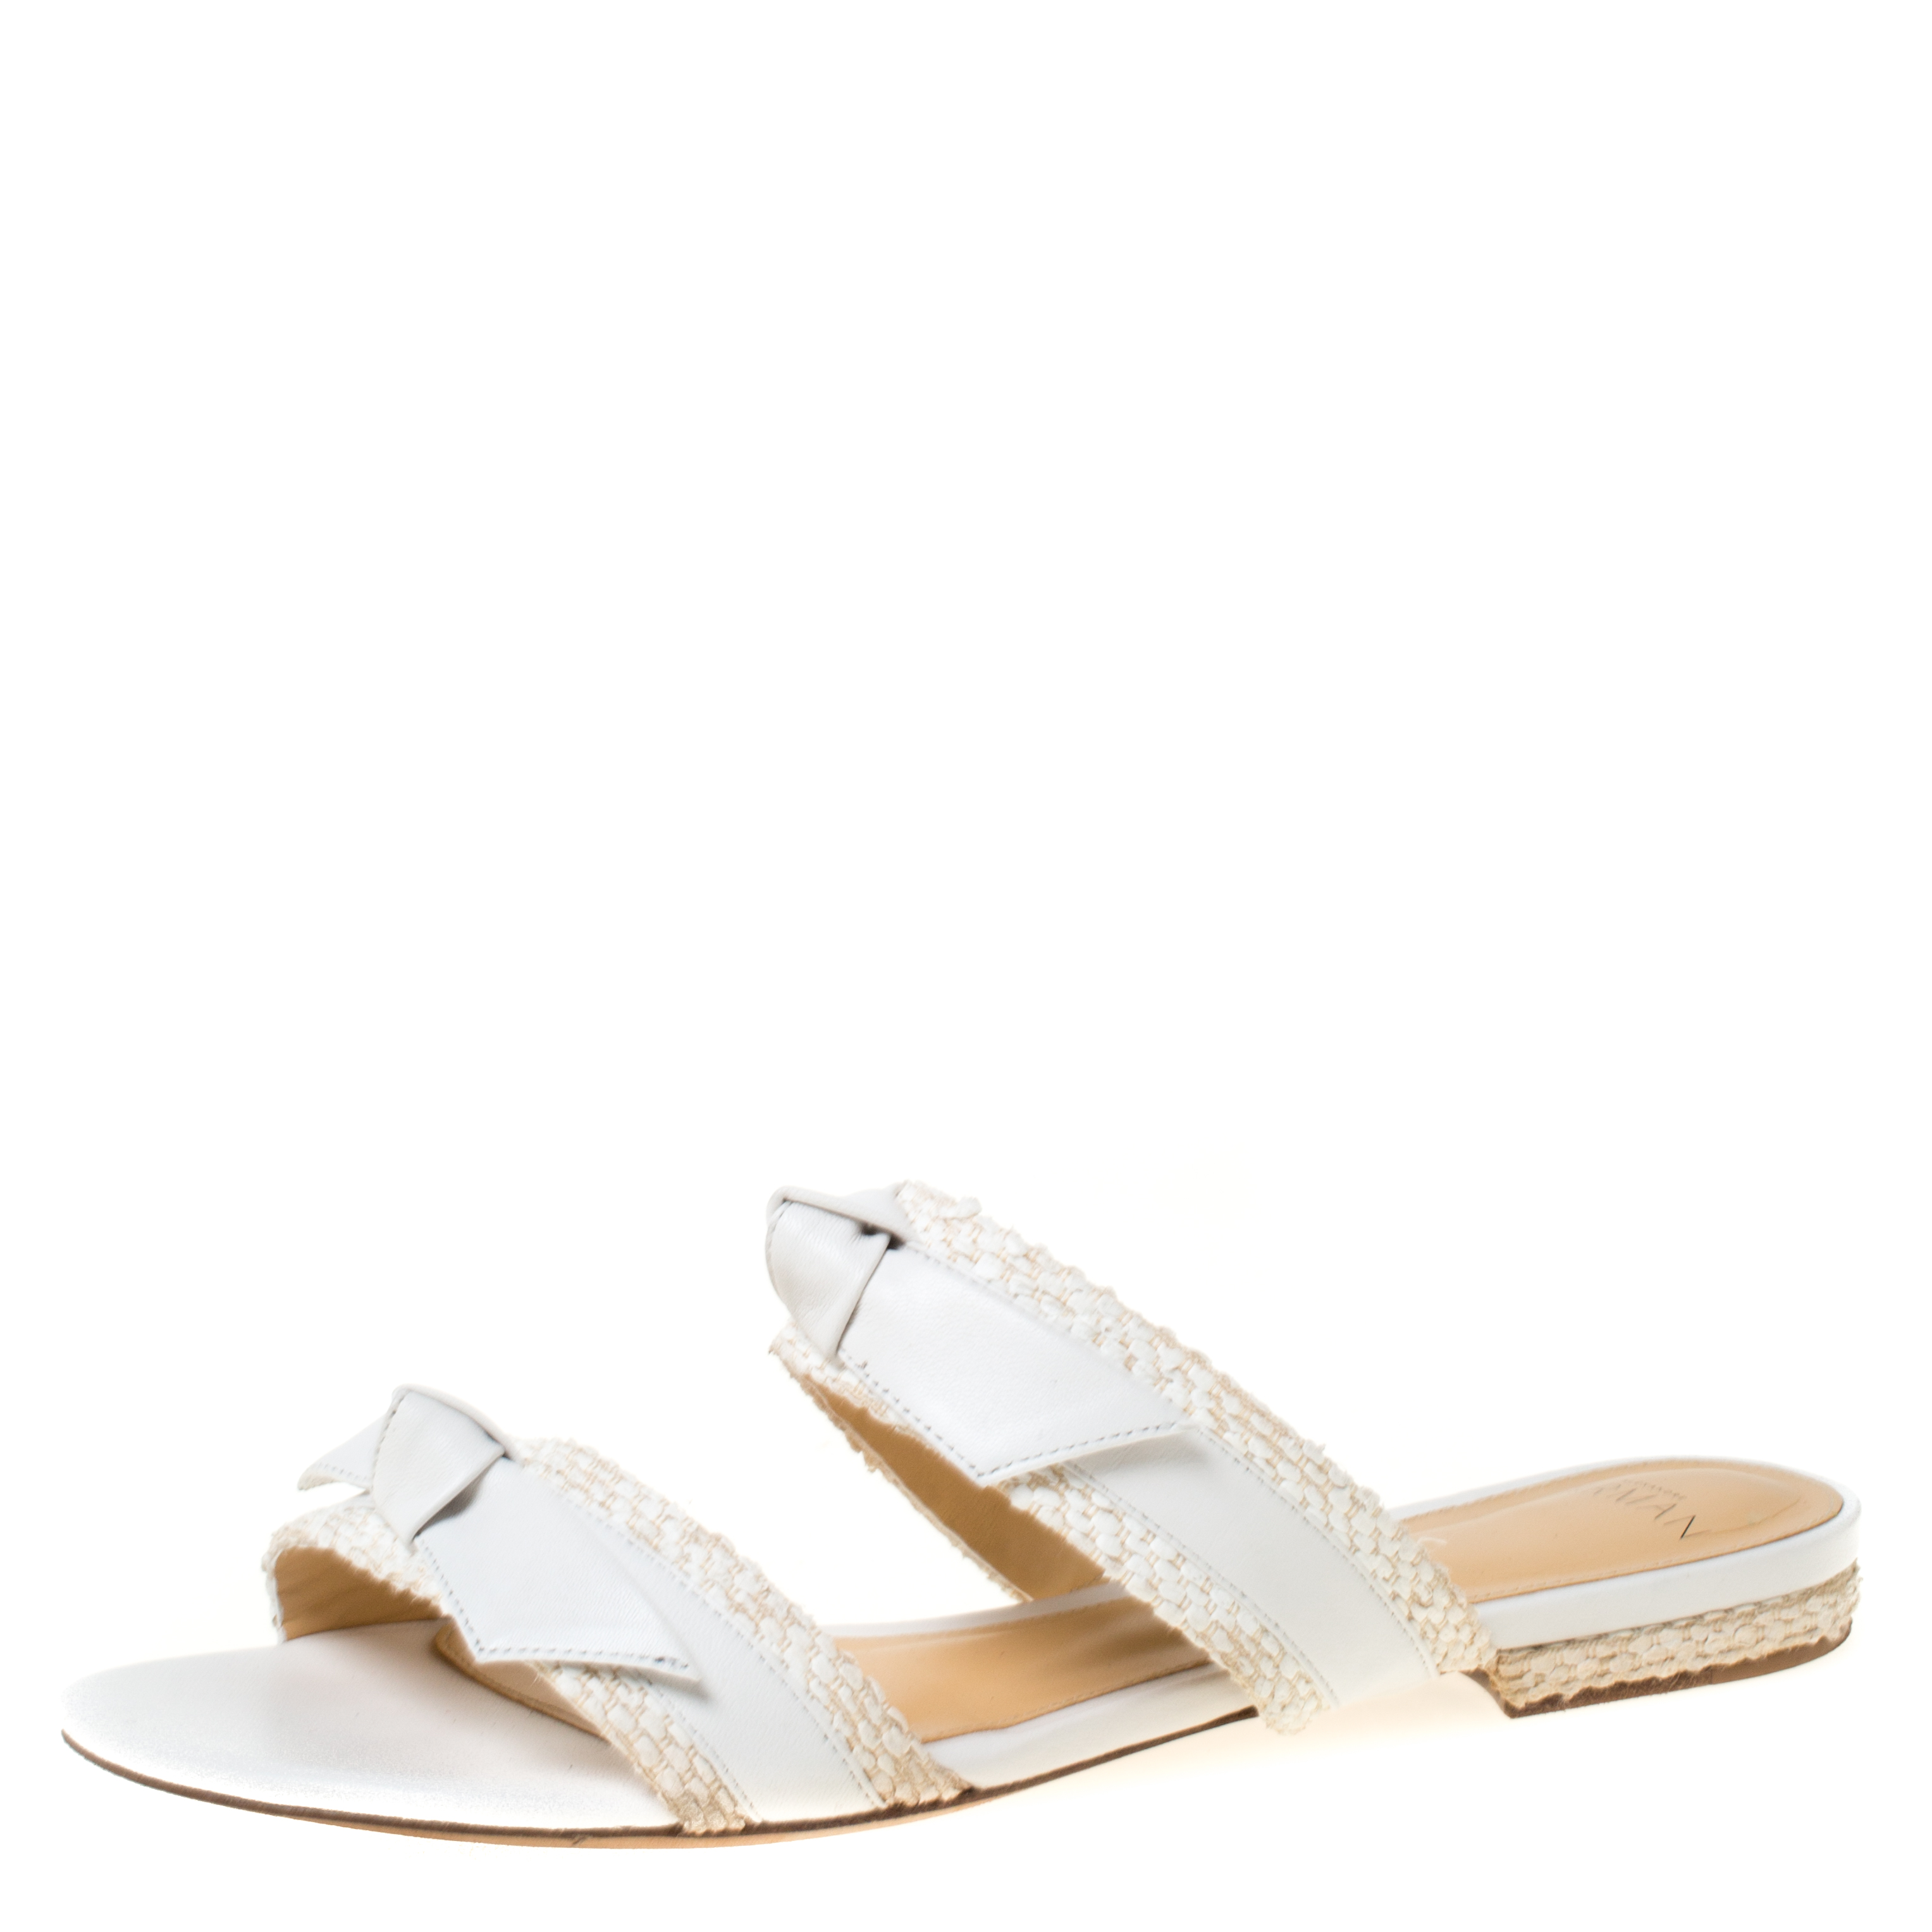  Alexandre Birman White Leather Clarita Braided Flat Sandals Size 38